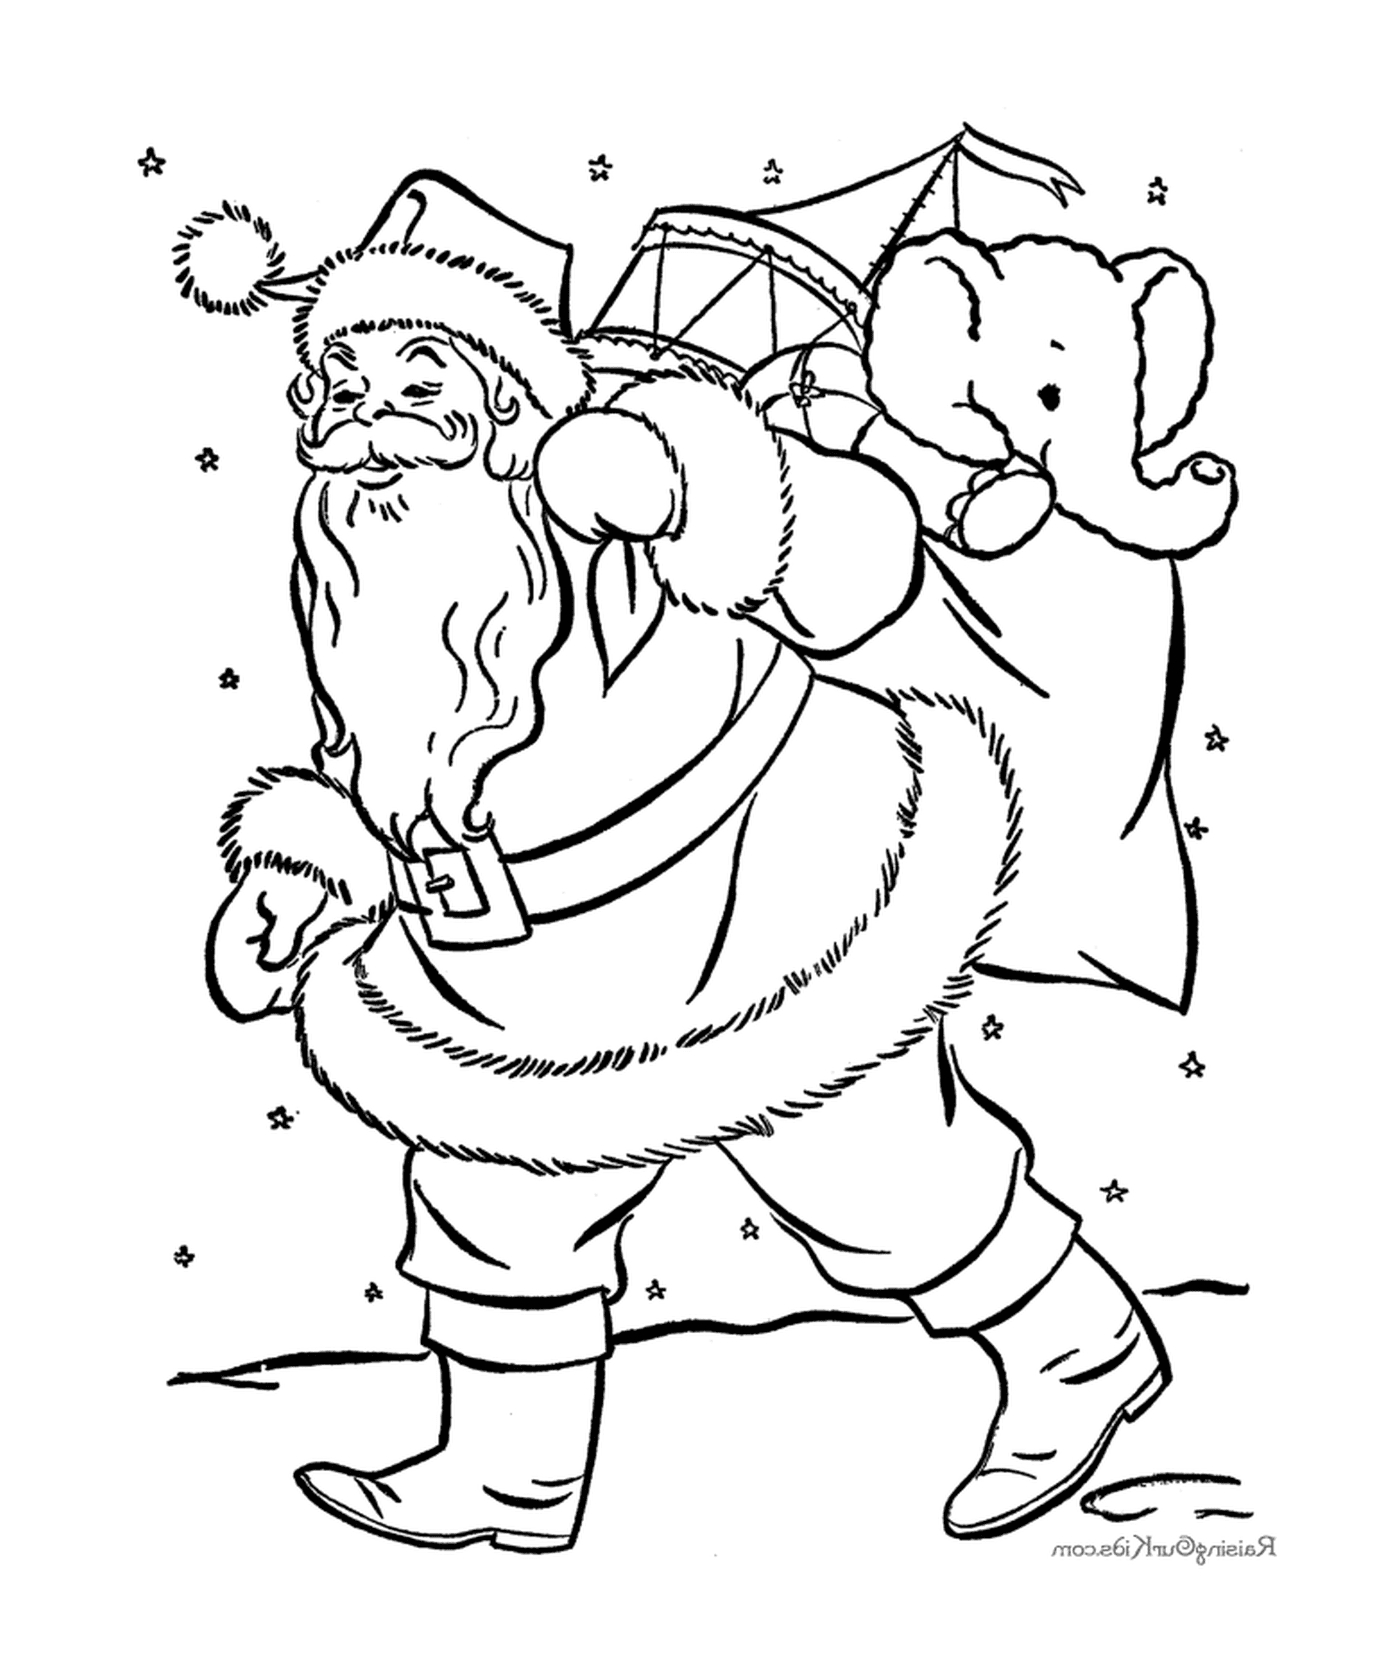  Santa carrying a bag of toys 